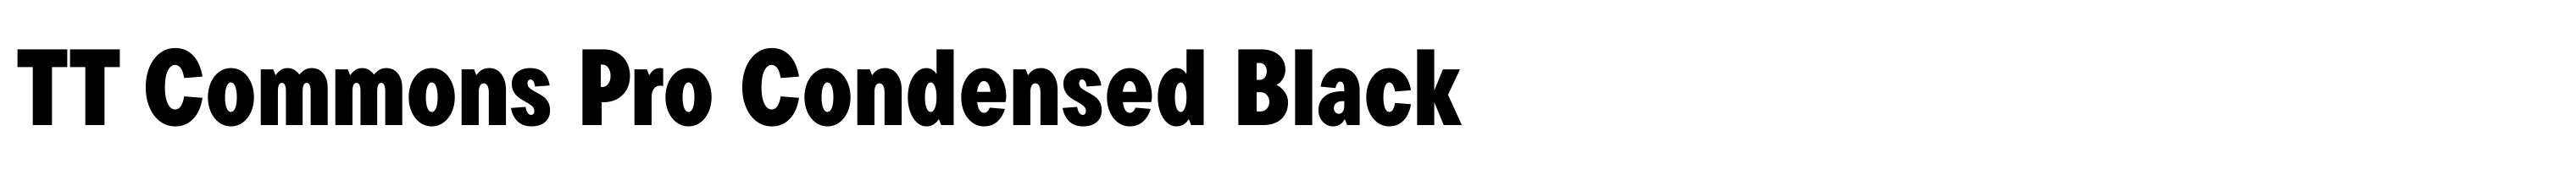 TT Commons Pro Condensed Black